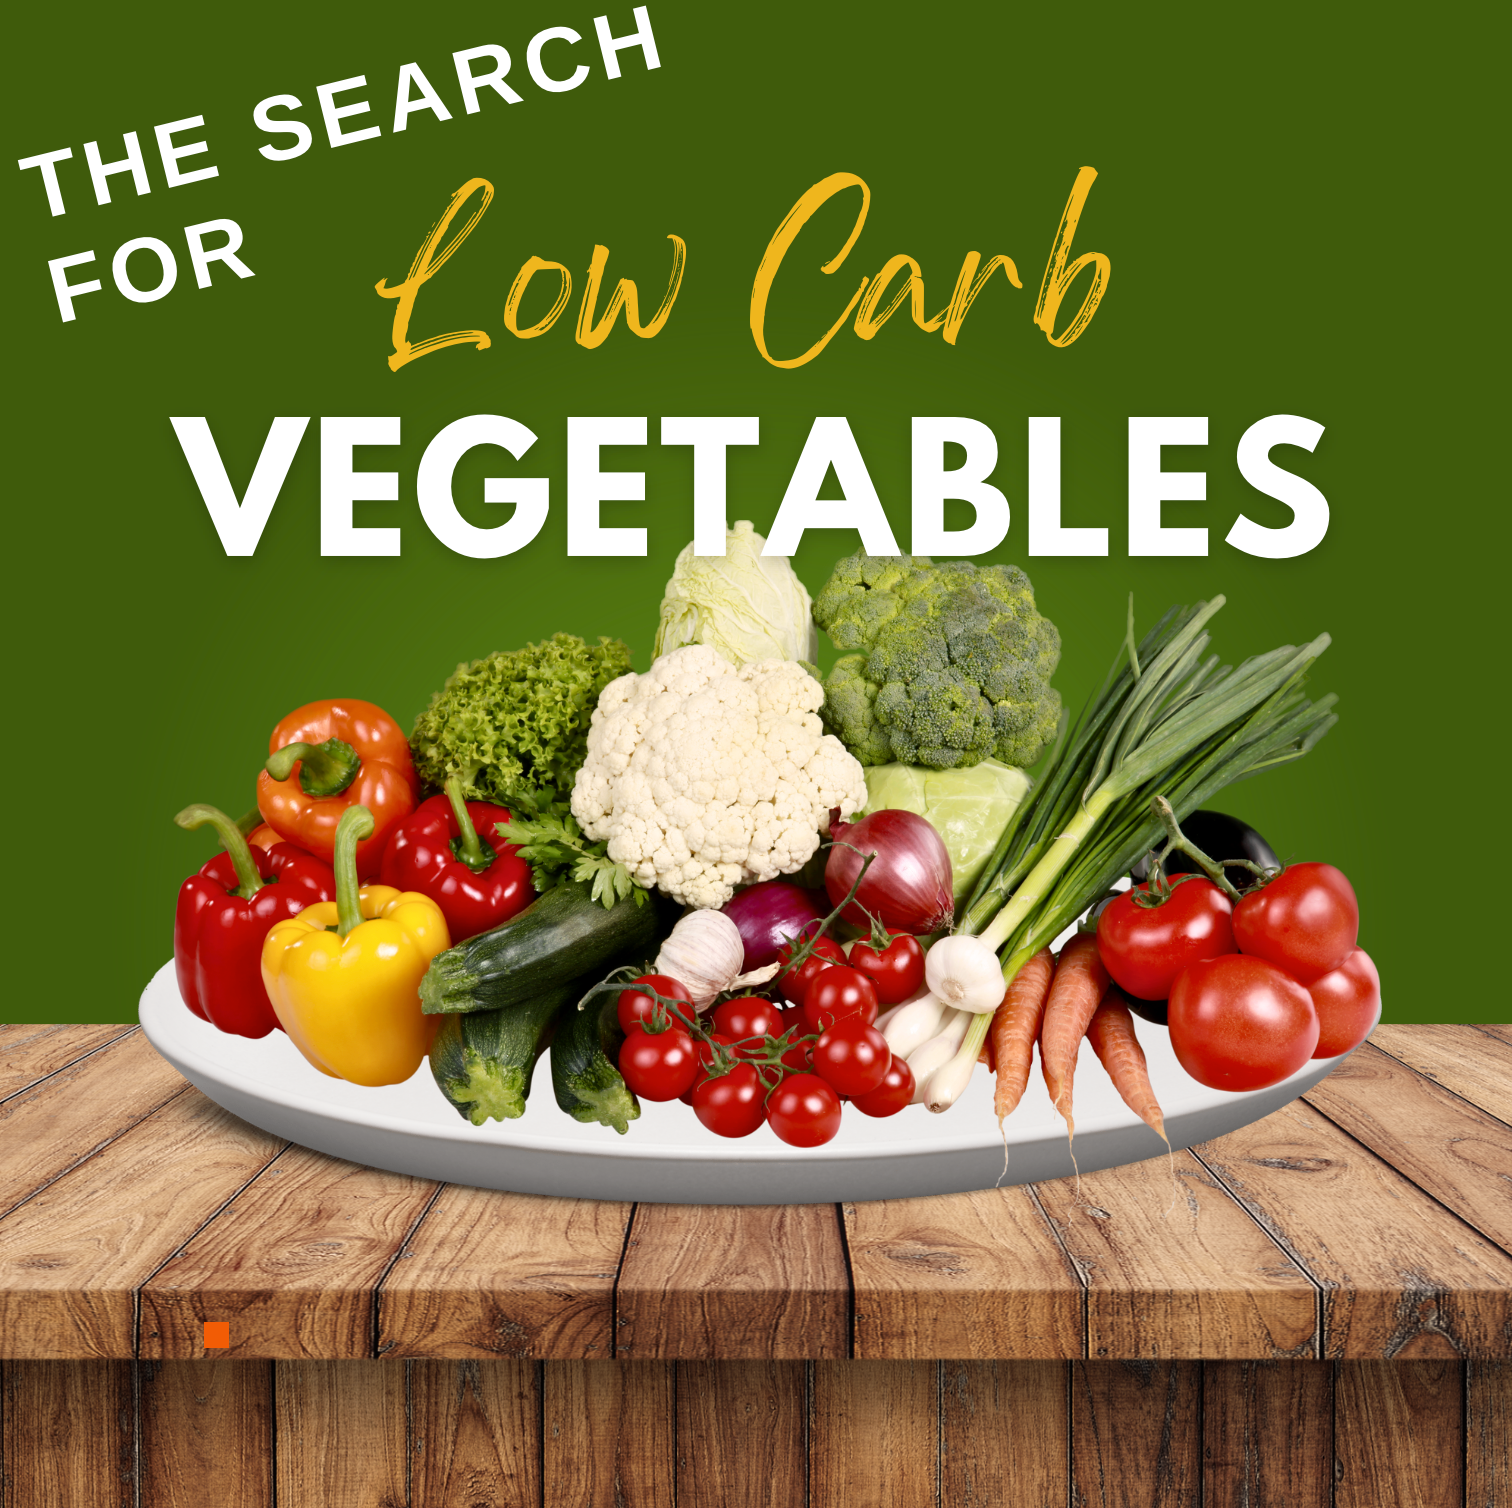 Top 10 Low Carb Vegetables